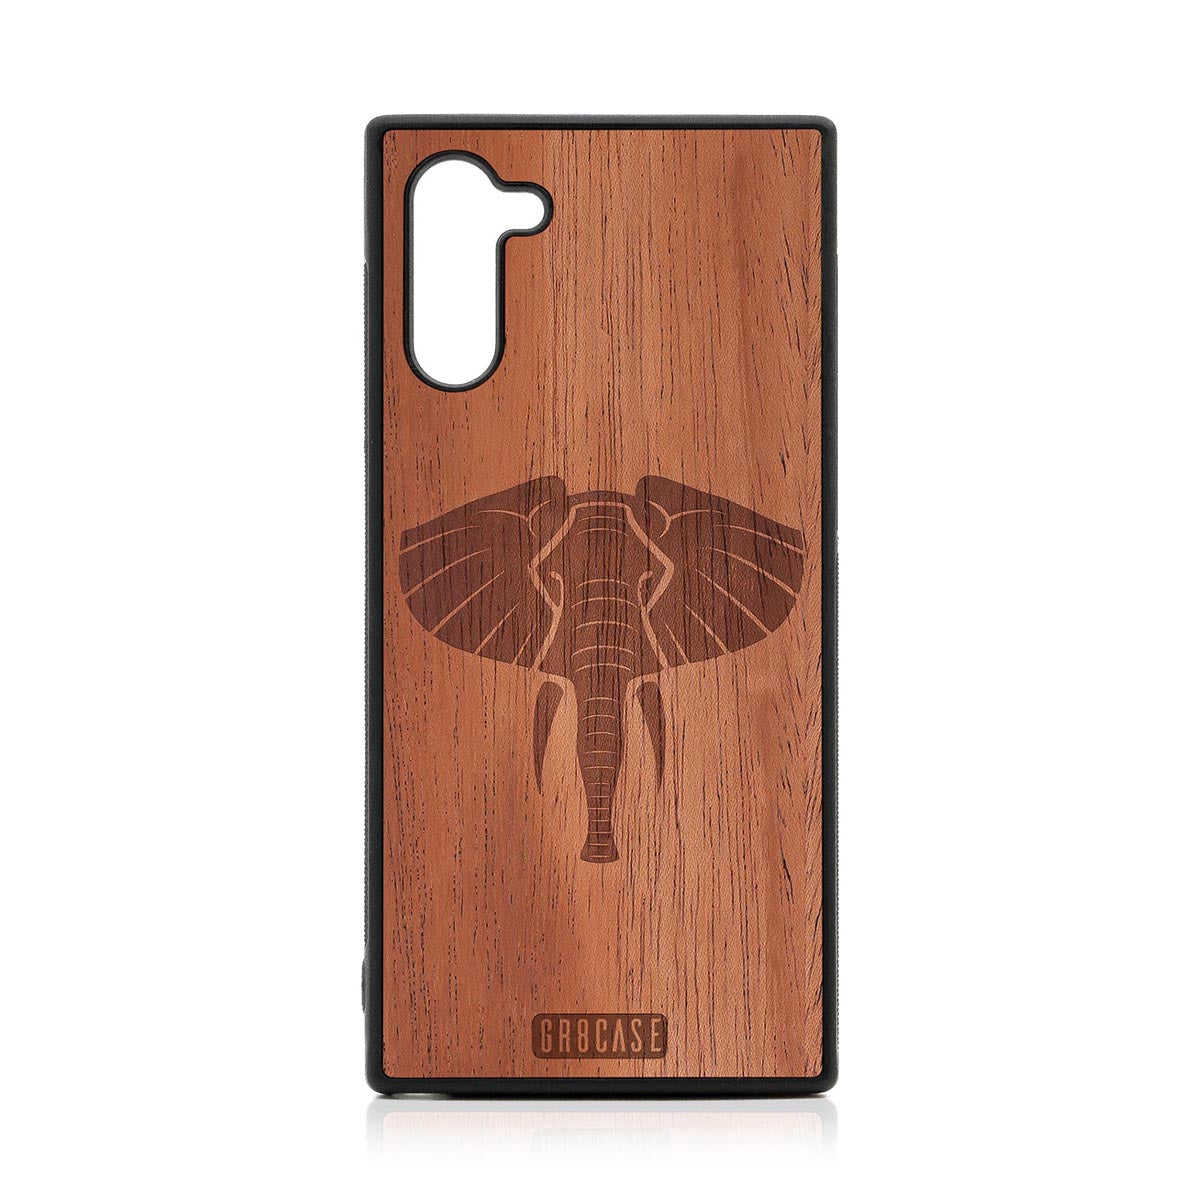 Elephant Design Wood Case Samsung Galaxy Note 10 by GR8CASE